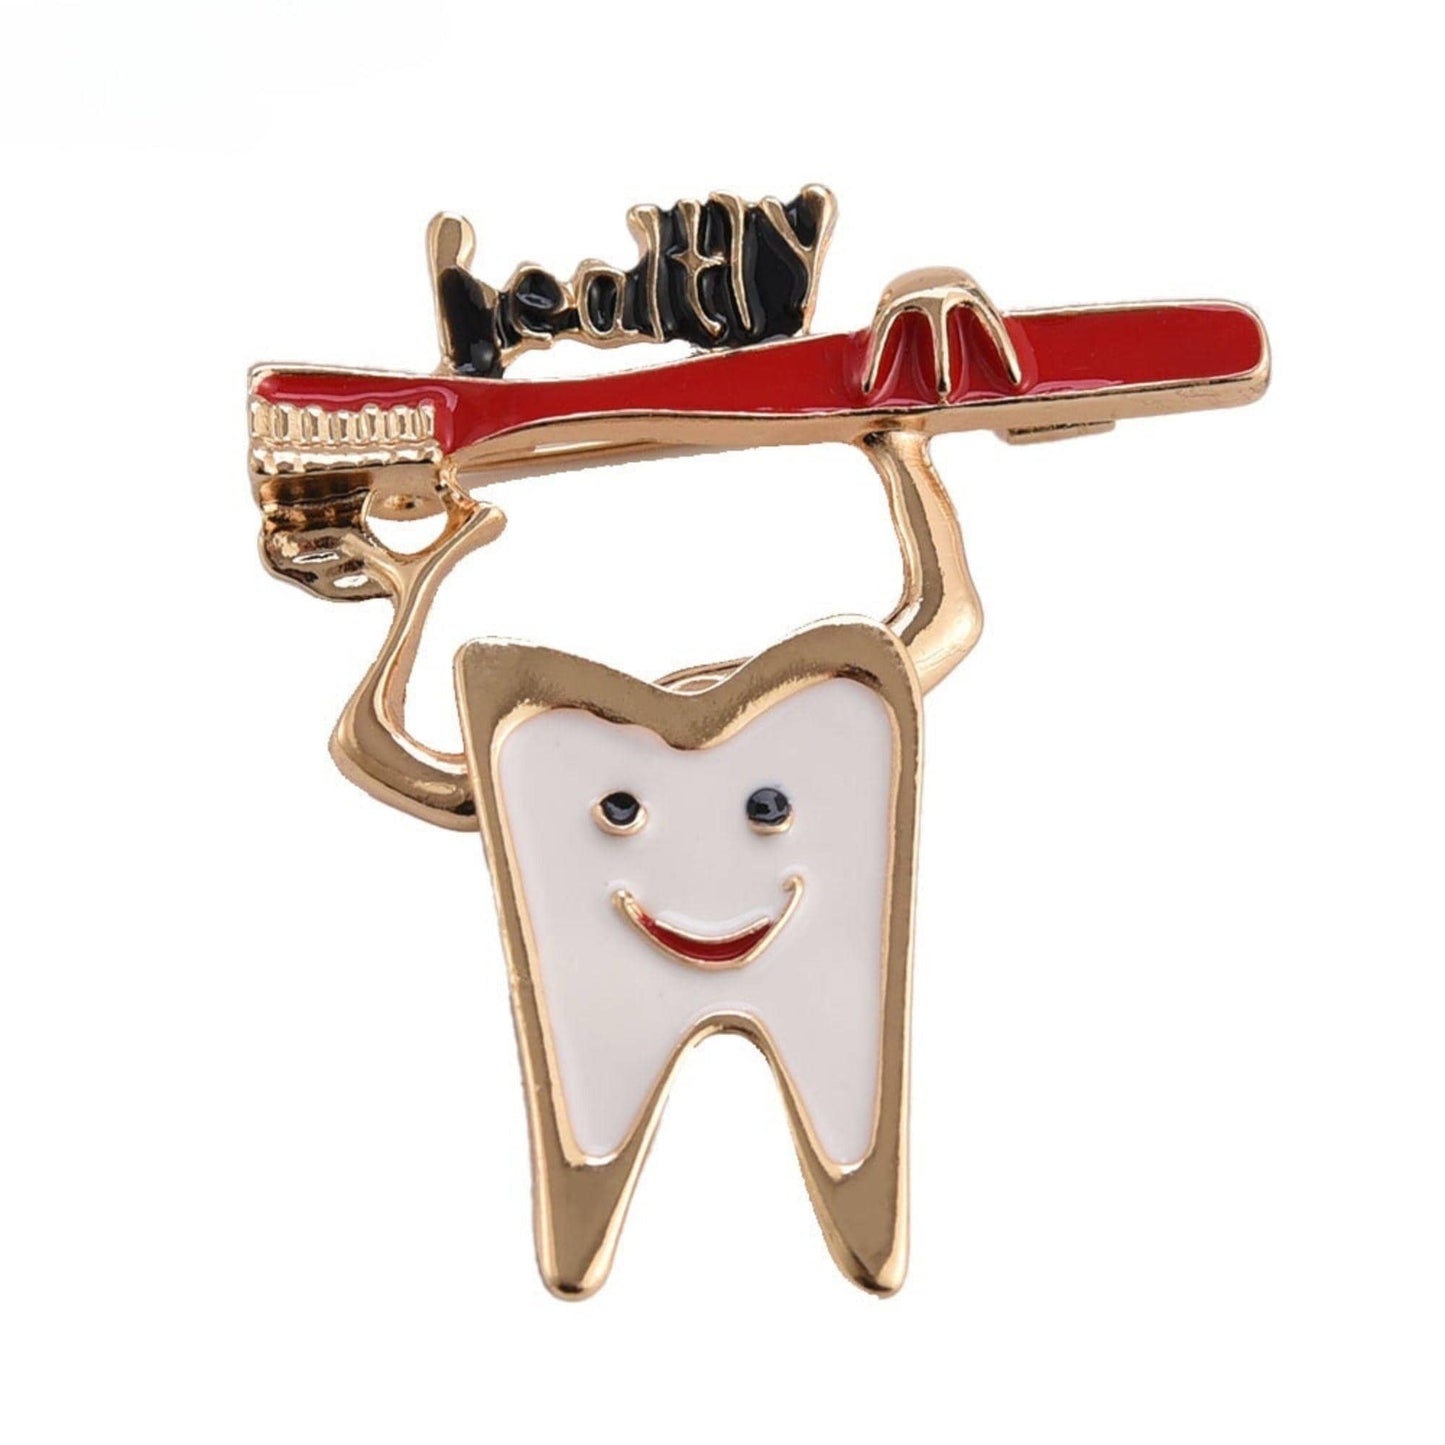 Dental enamel pins Medical Cute Tooth Shape Brooch Zinc Alloy Gold Color Pin Dentist Nurse Enamel Pins Backpack Badge Women Gift